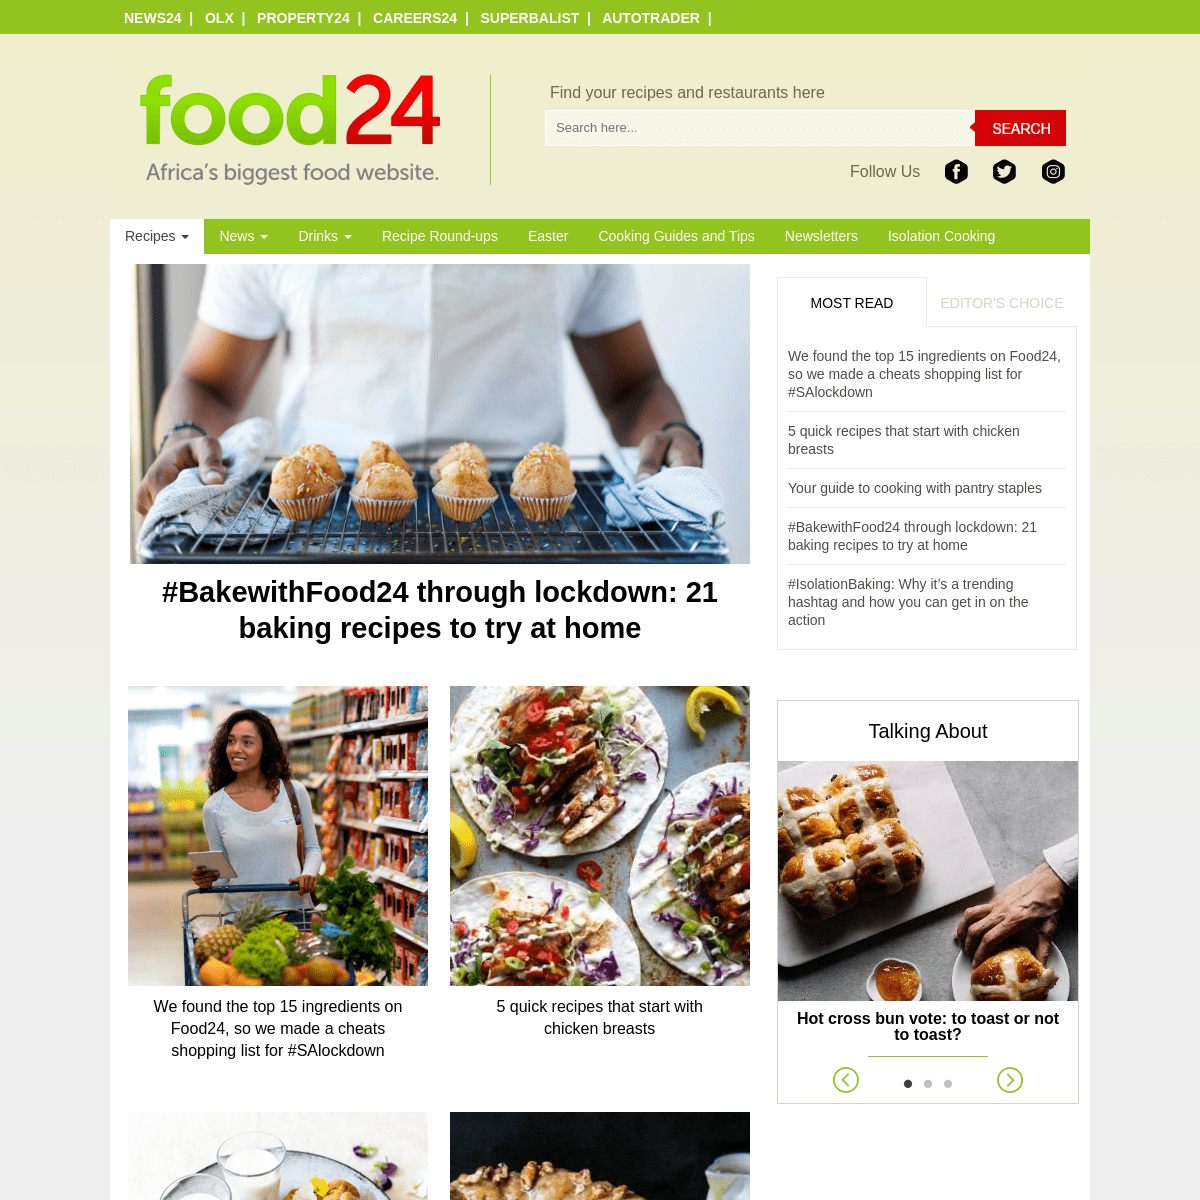 A complete backup of food24.com